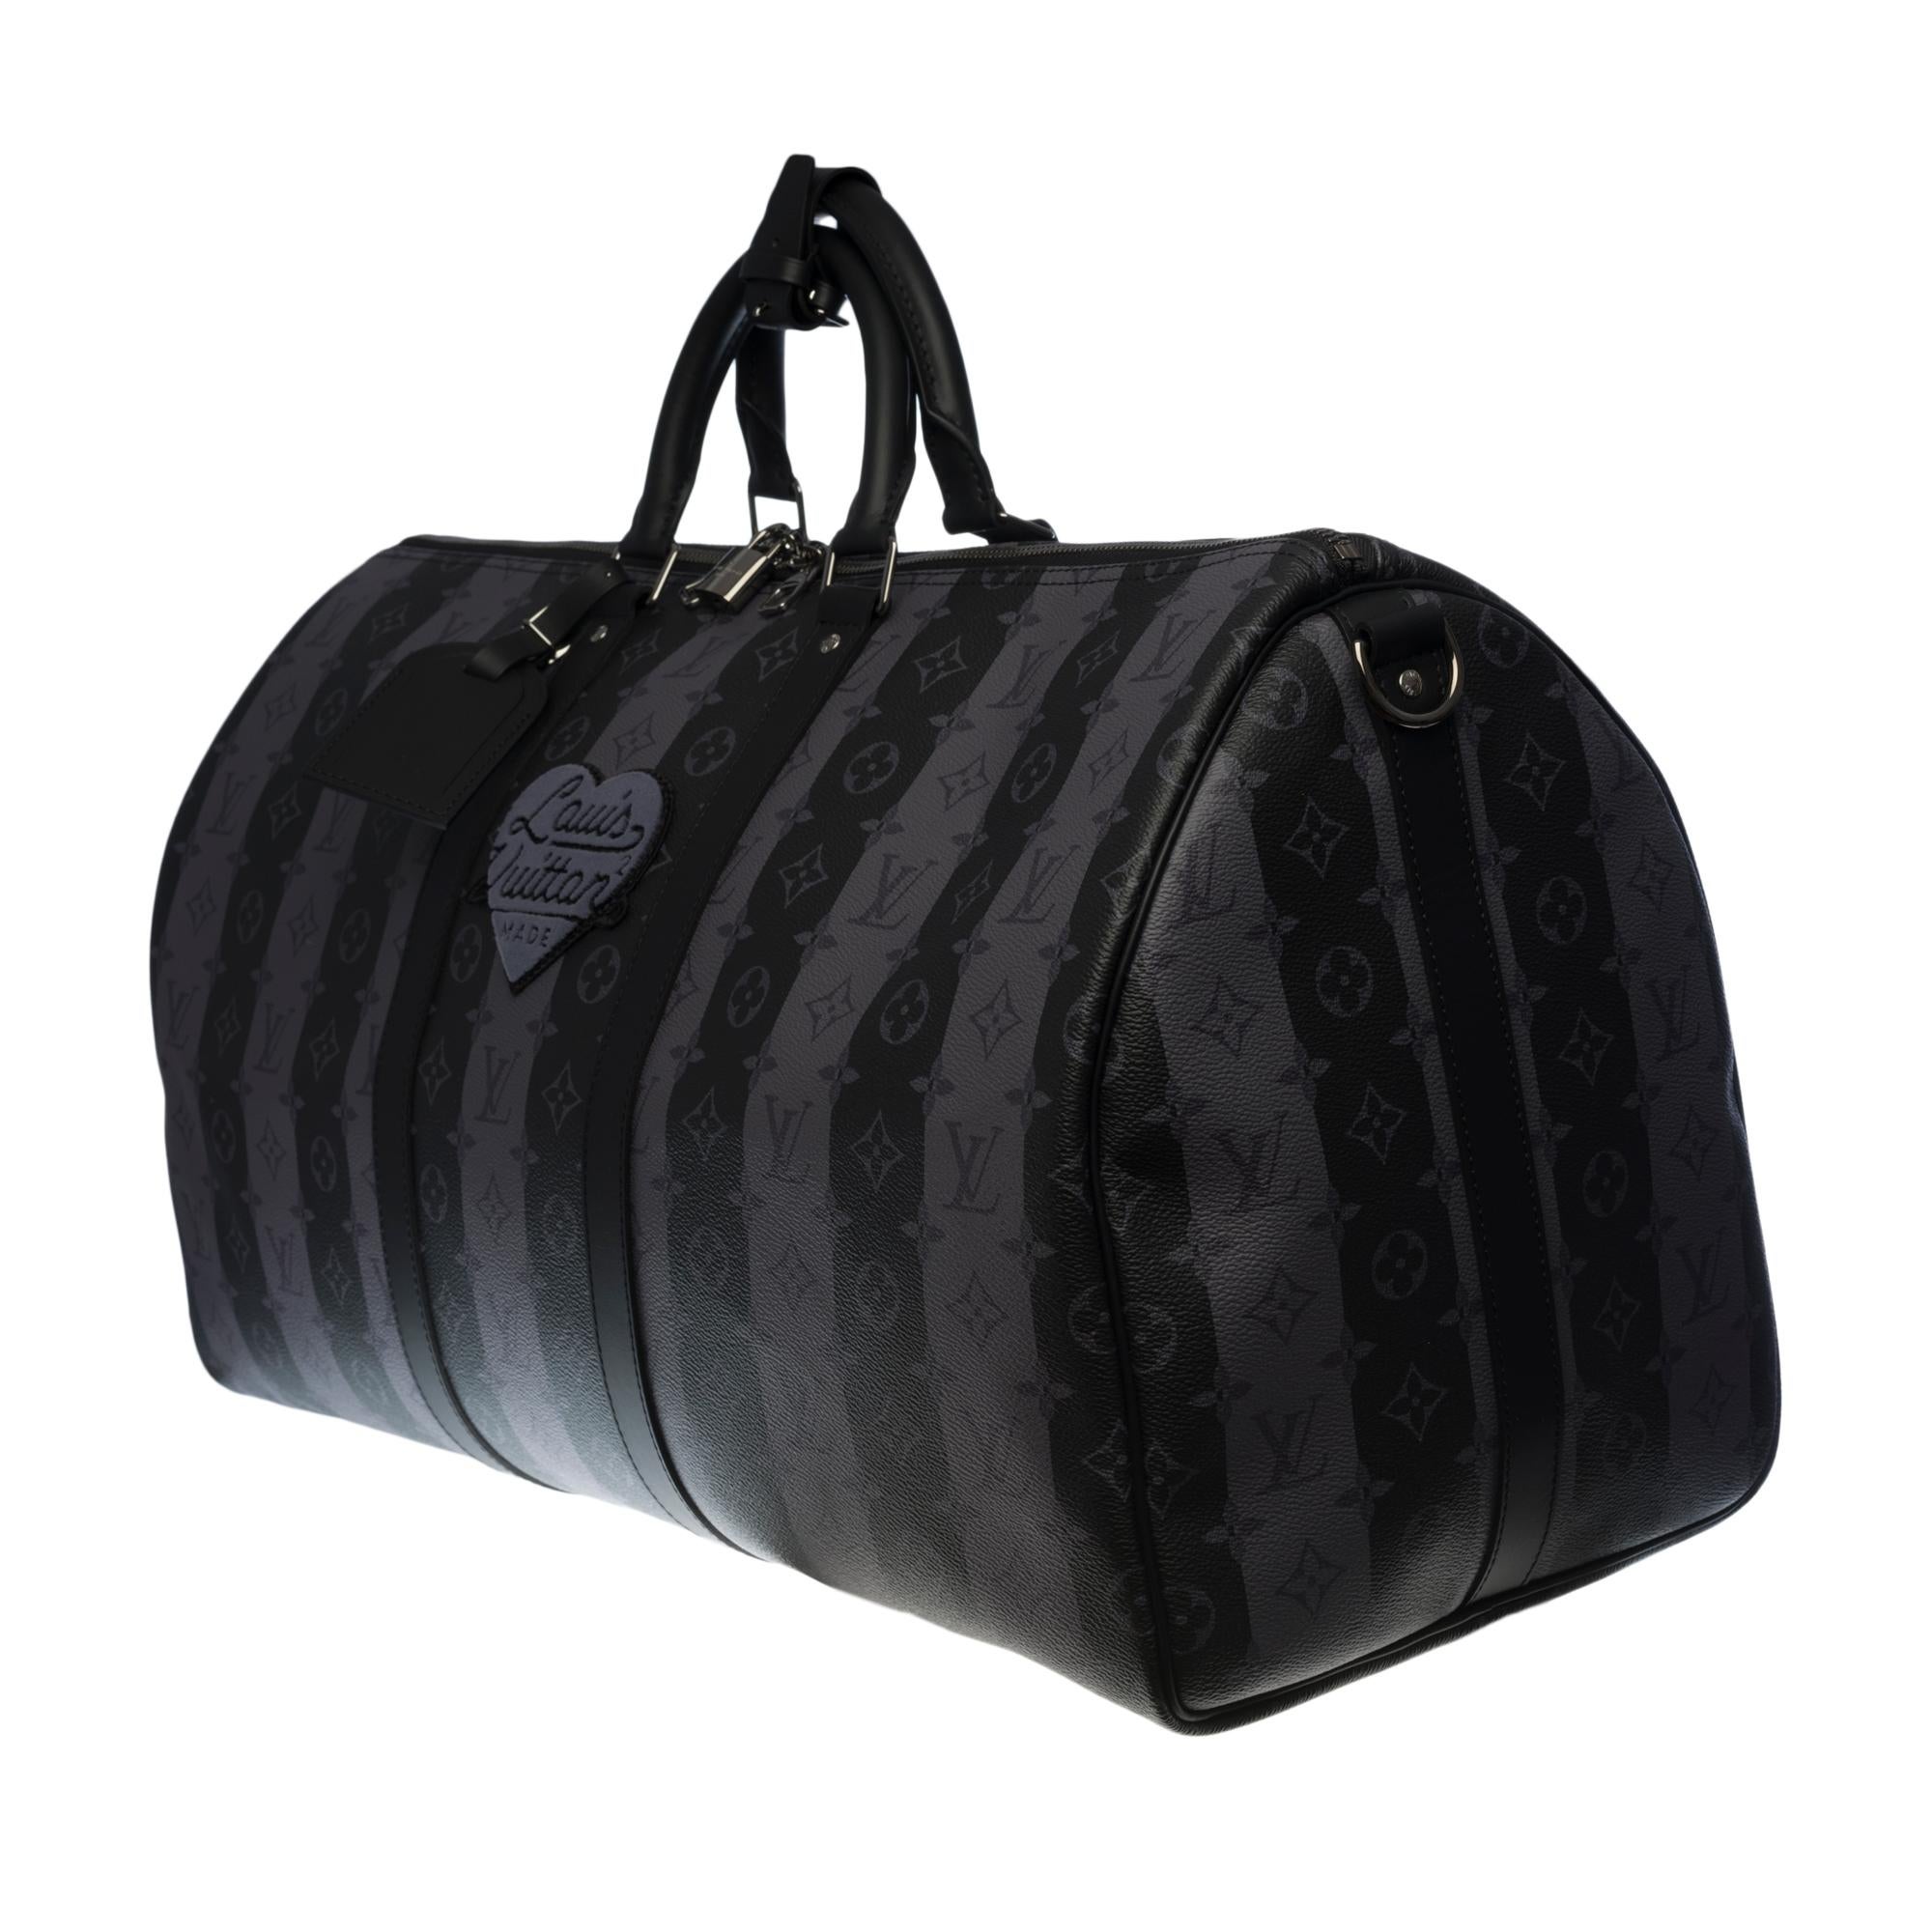 Black NEW-Louis Vuitton keepall 55 strap Travel bag in Stripes canvas by Abloh/Nigo